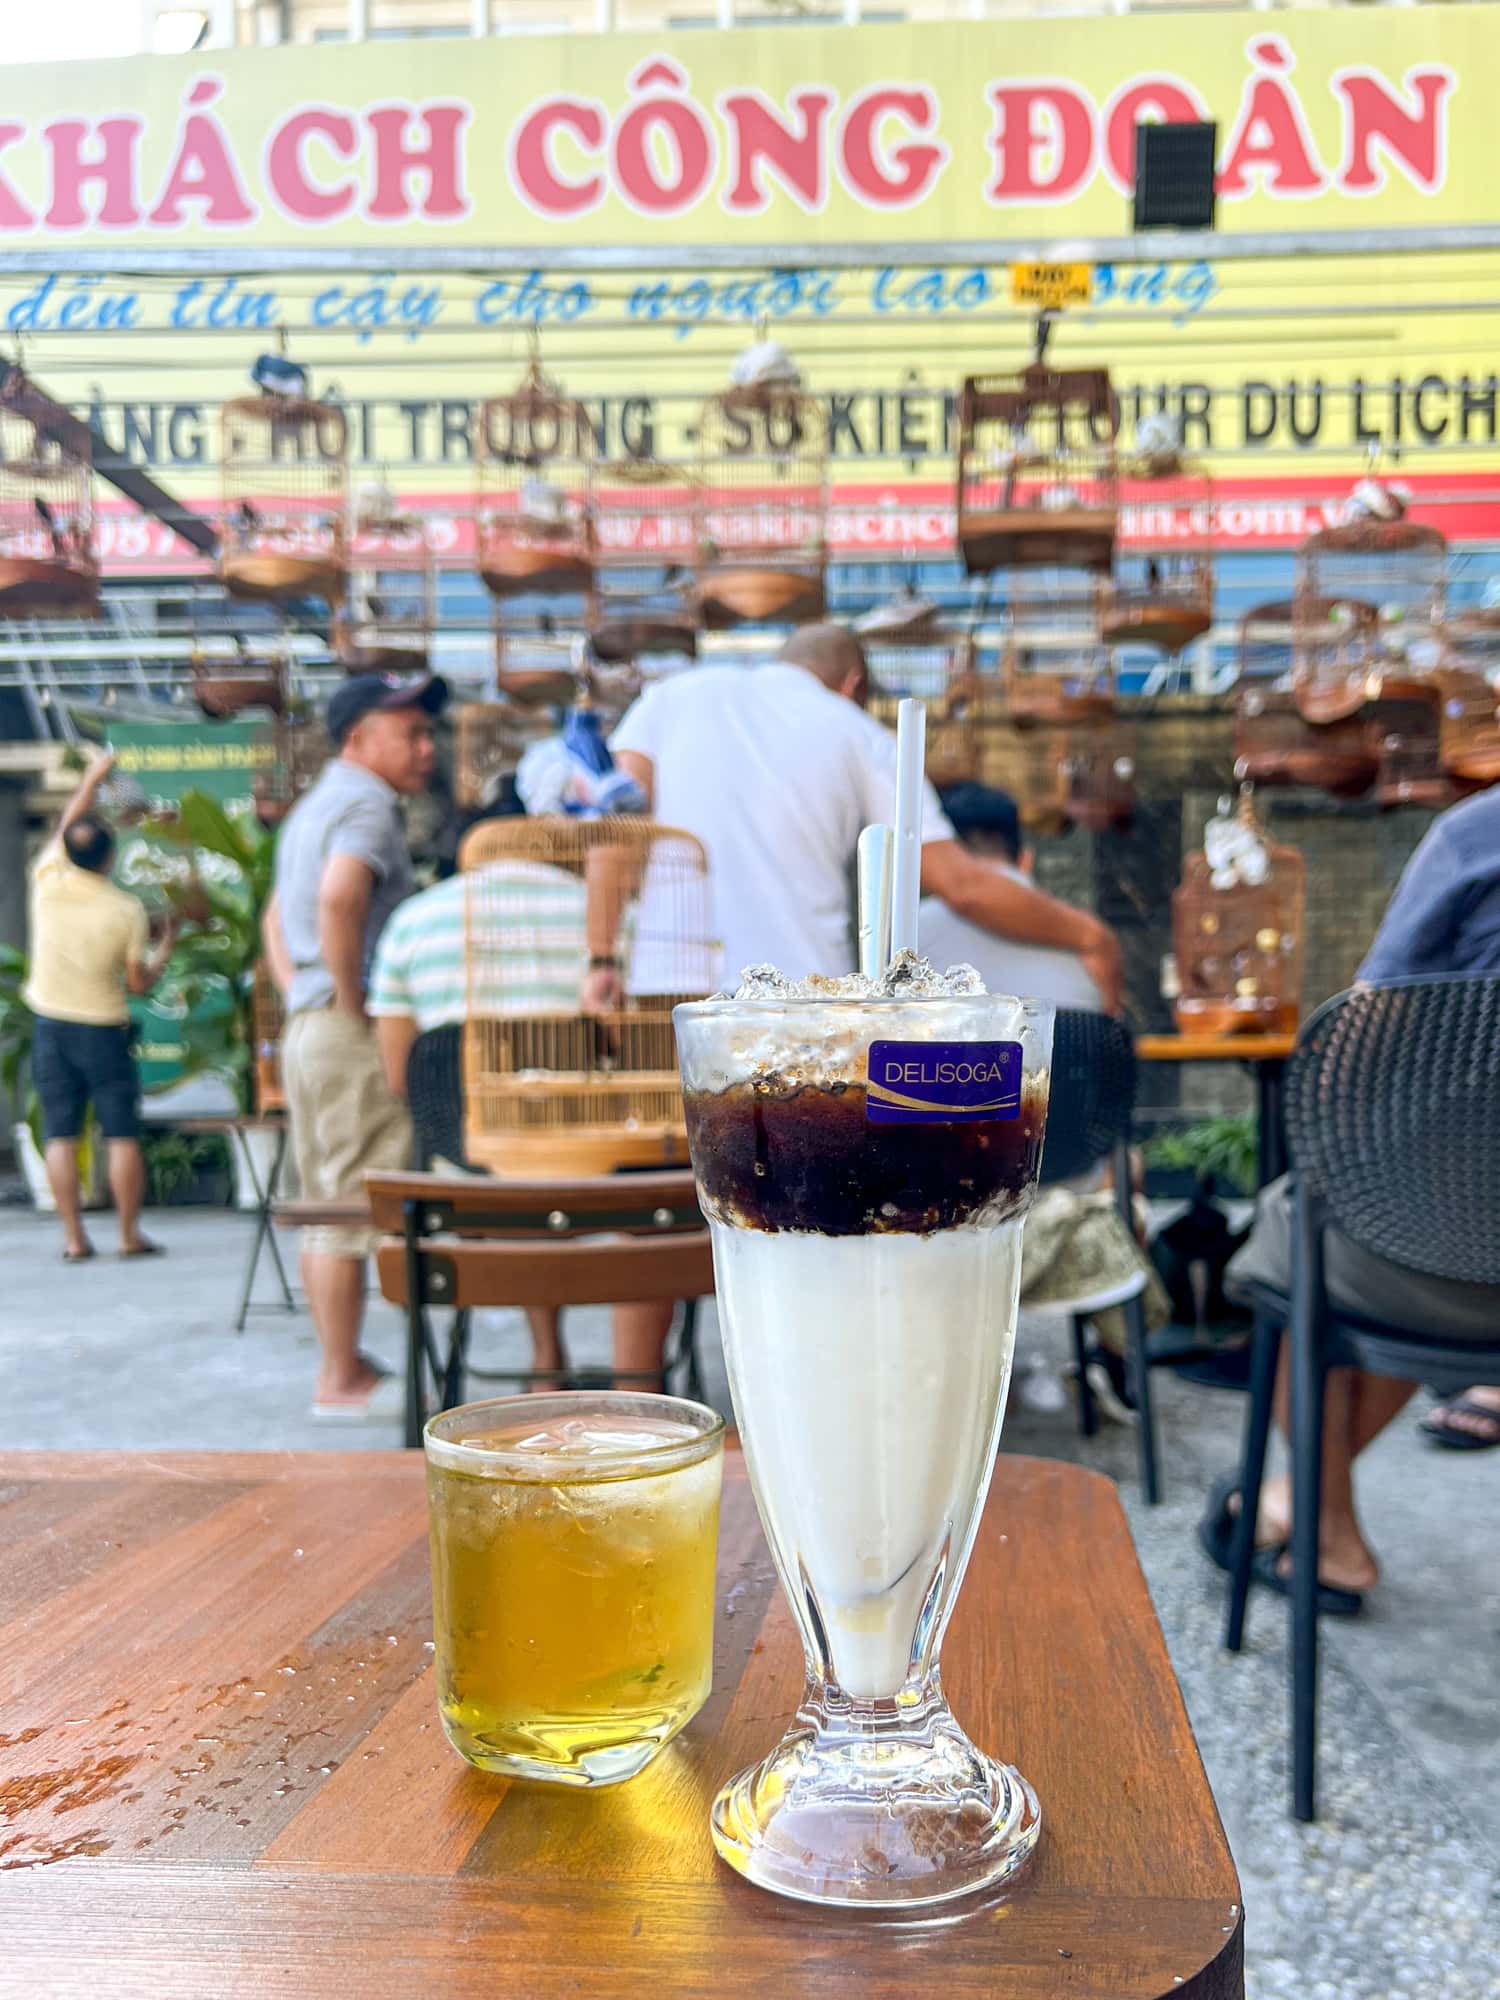 Yogurt coffee and a glass of iced tea at Cong Doan Restaurant